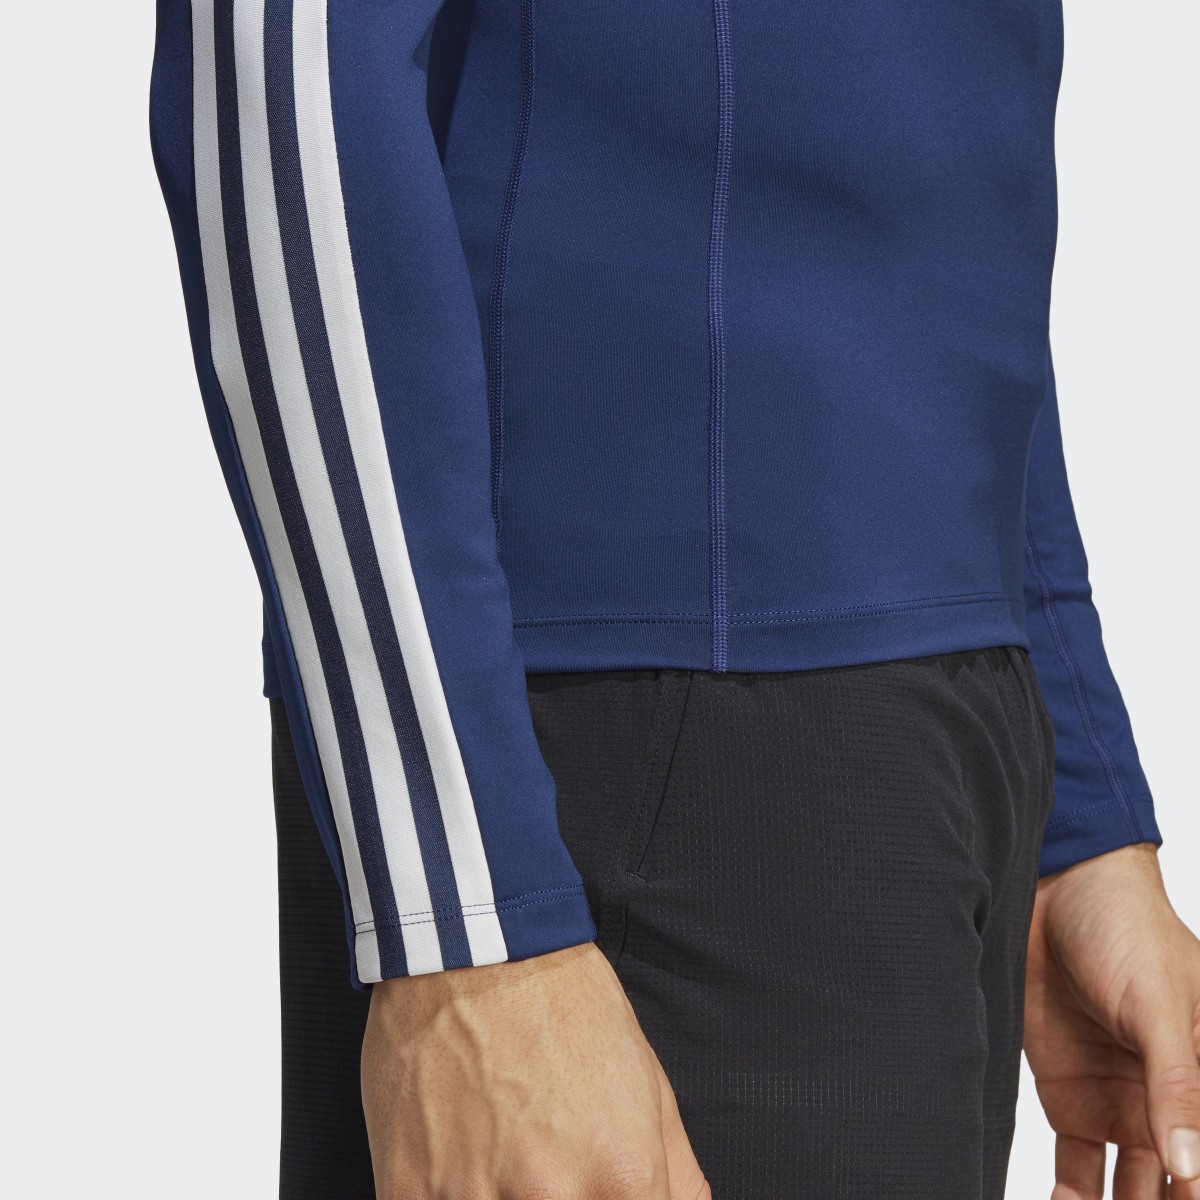 Adidas Techfit 3-Stripes Training Long-Sleeve Top. 7